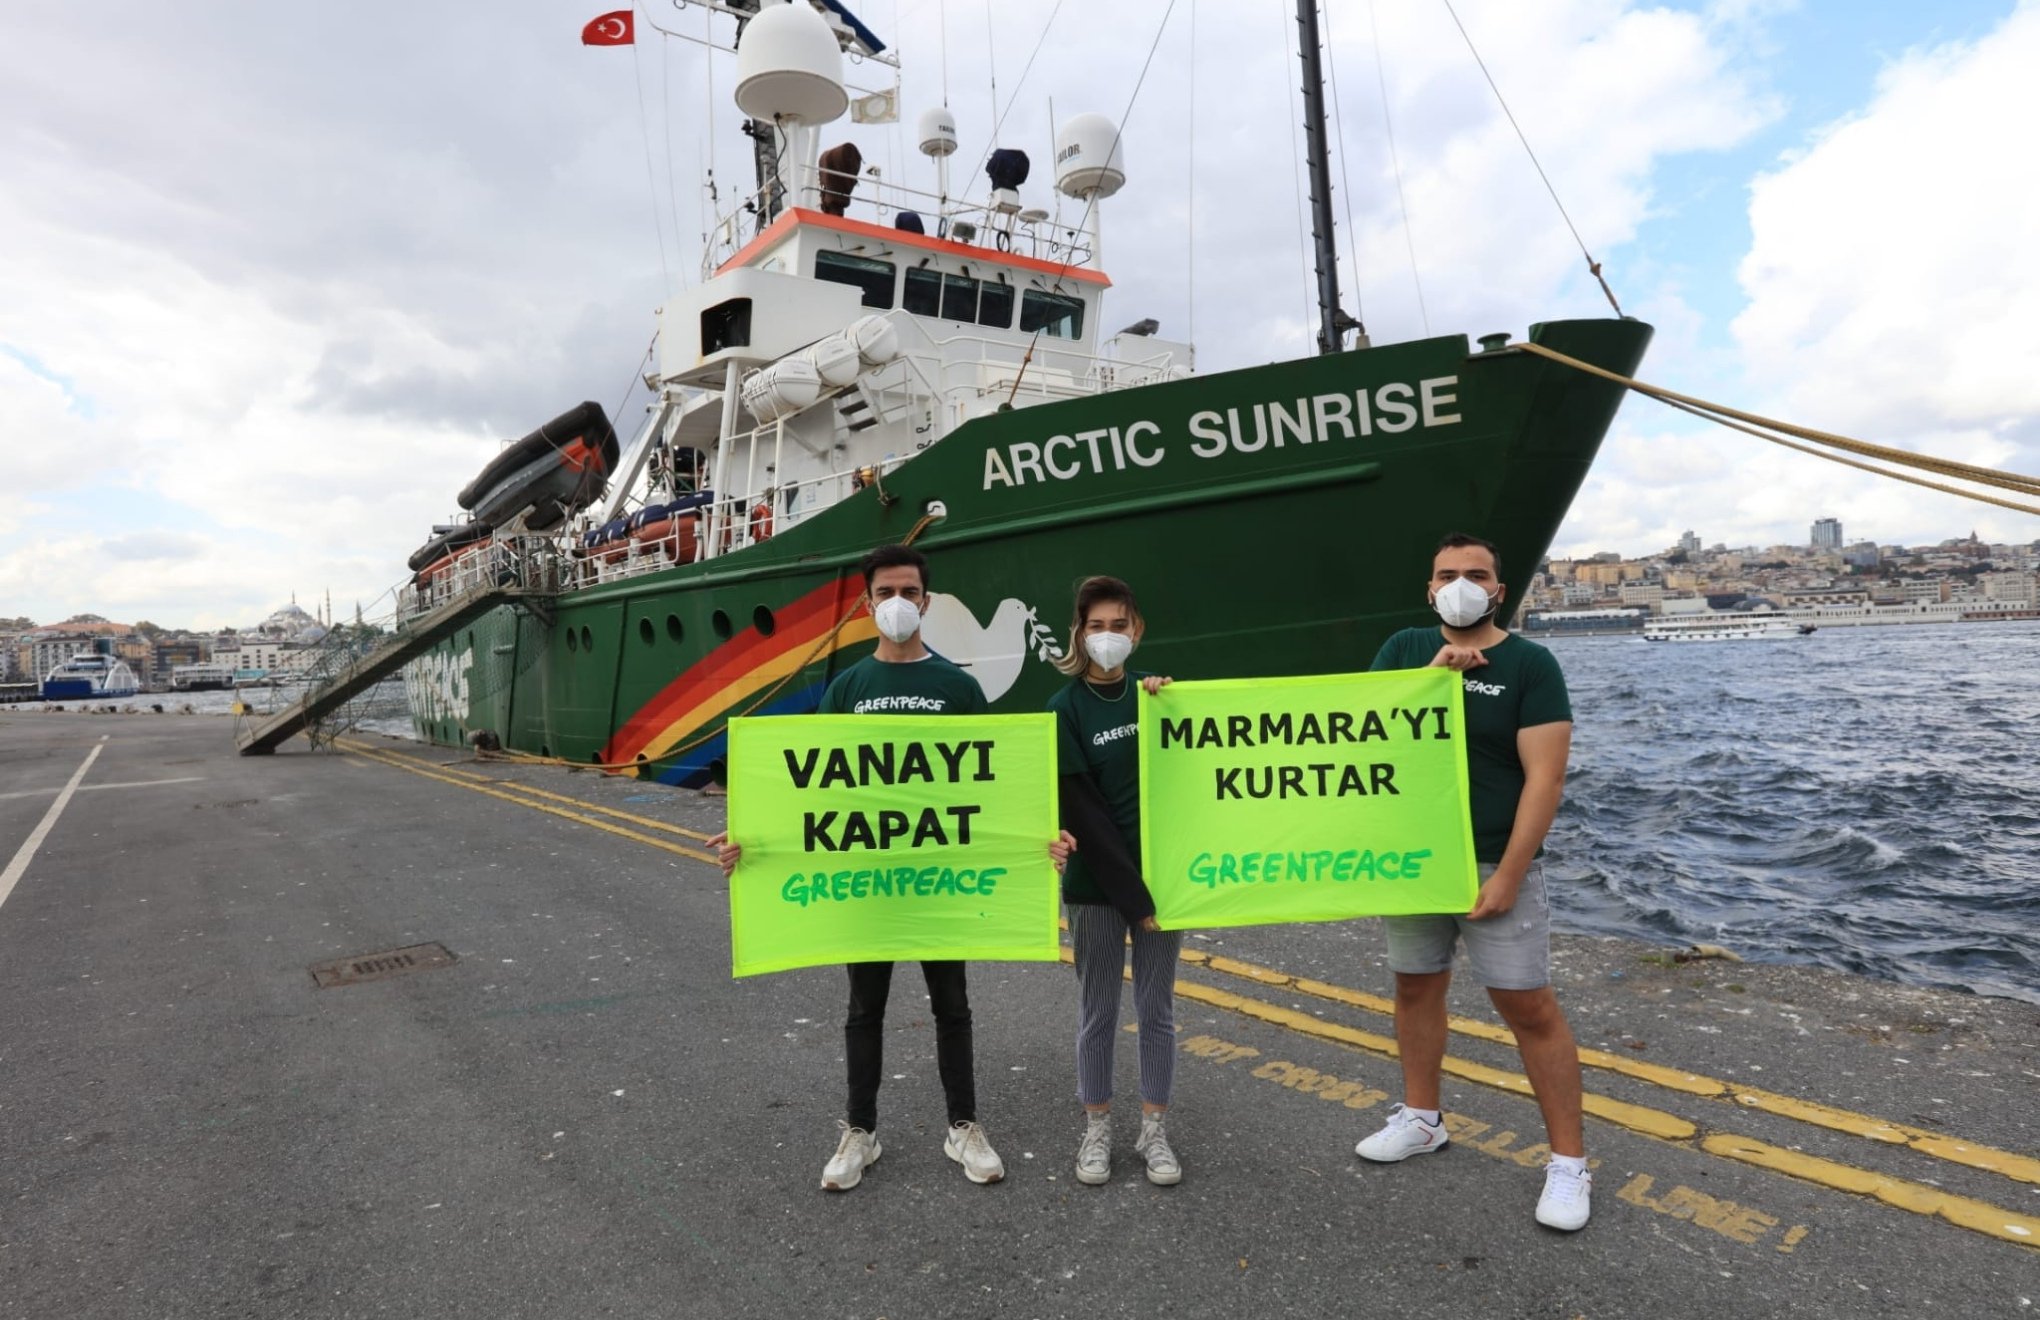 Greenpeace gemisi "Arctic Sunrise" İstanbul’da